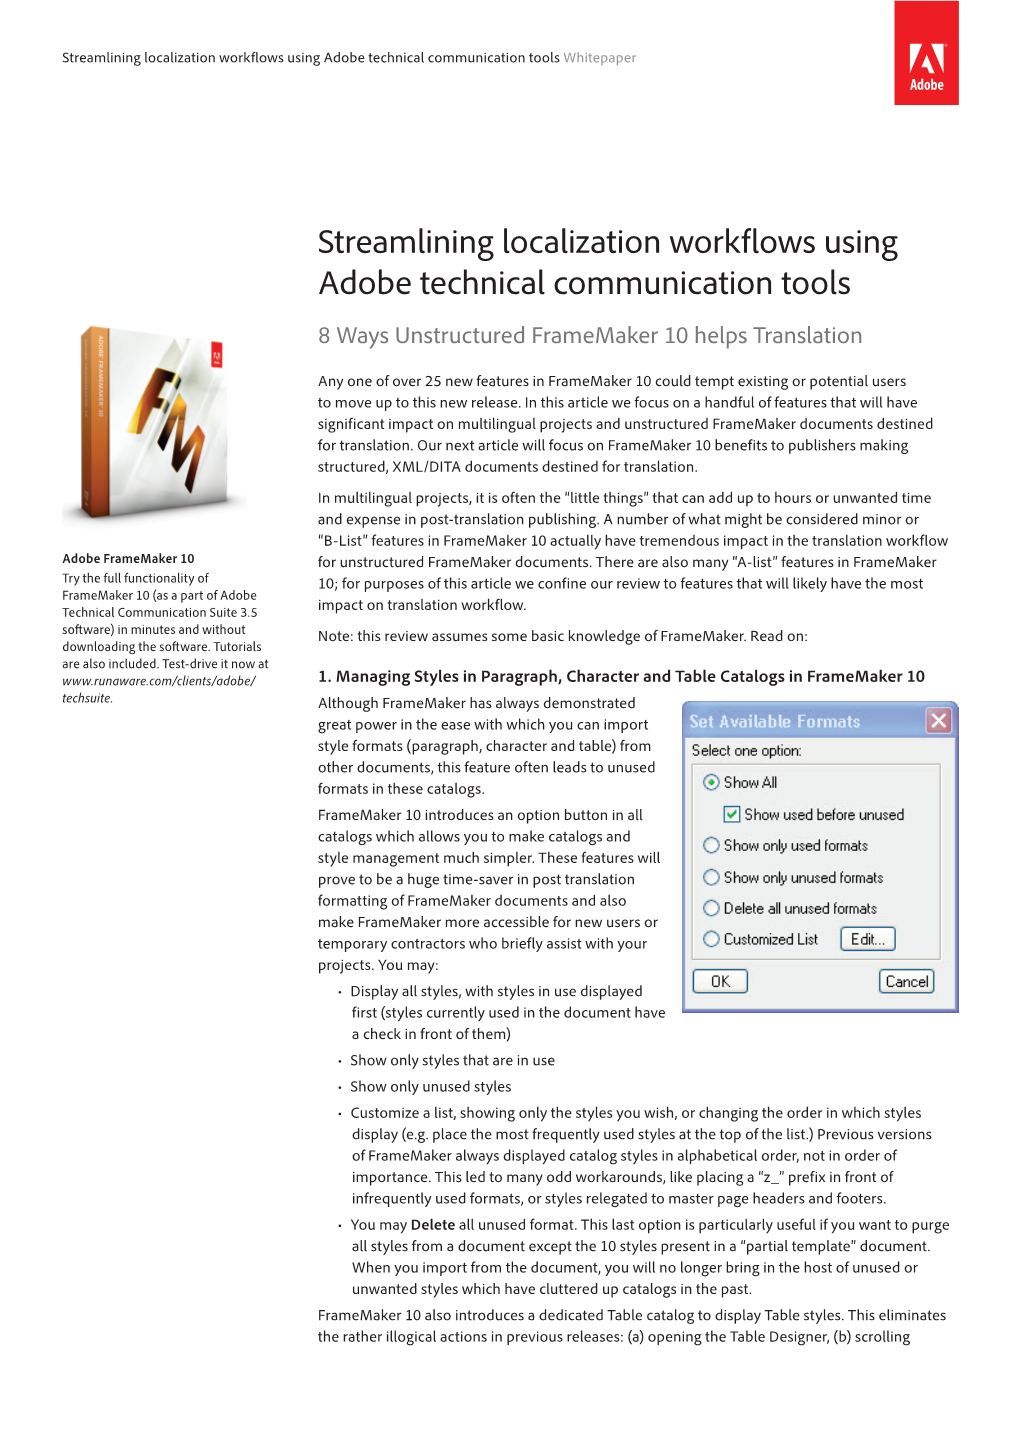 Streamlining Localization Workflows Using Adobe Technical